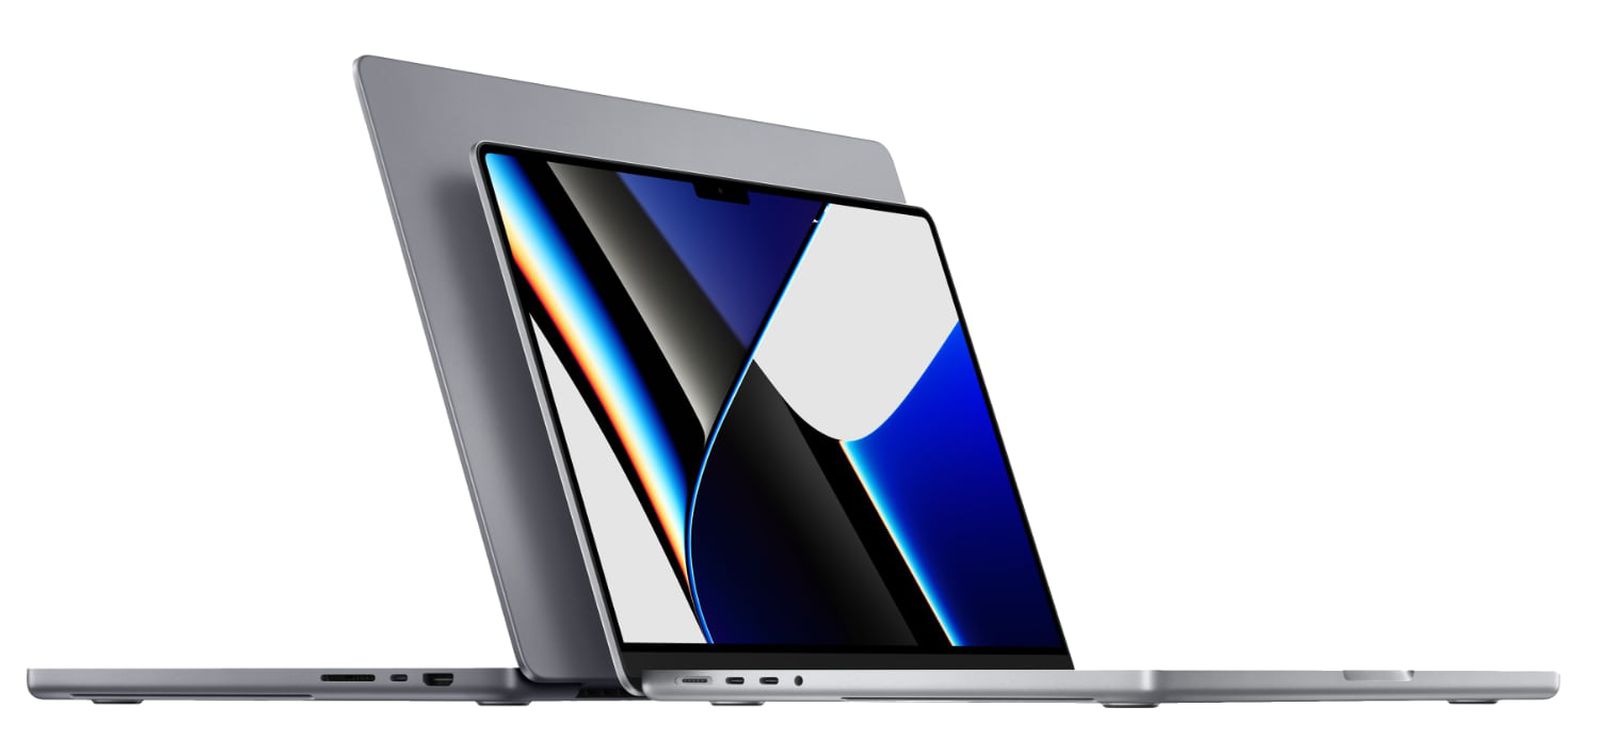 DoJ Arrests Hacker Involved With REvil Group That Stole Apple's MacBook Pro Sche..